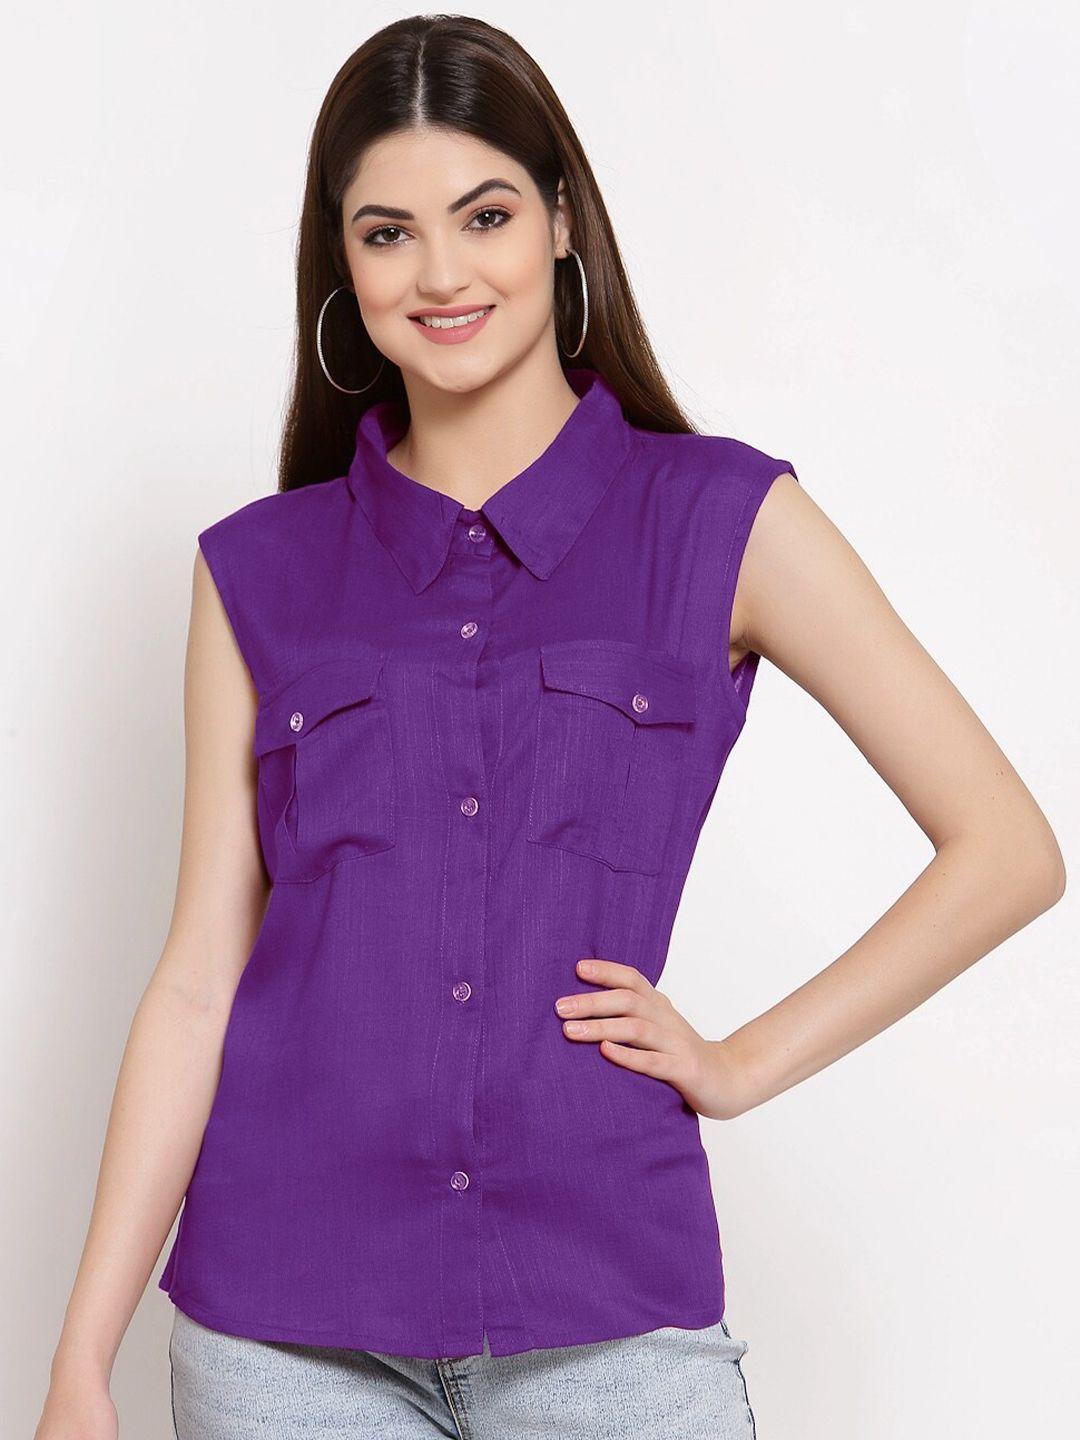 patrorna women purple comfort casual shirt